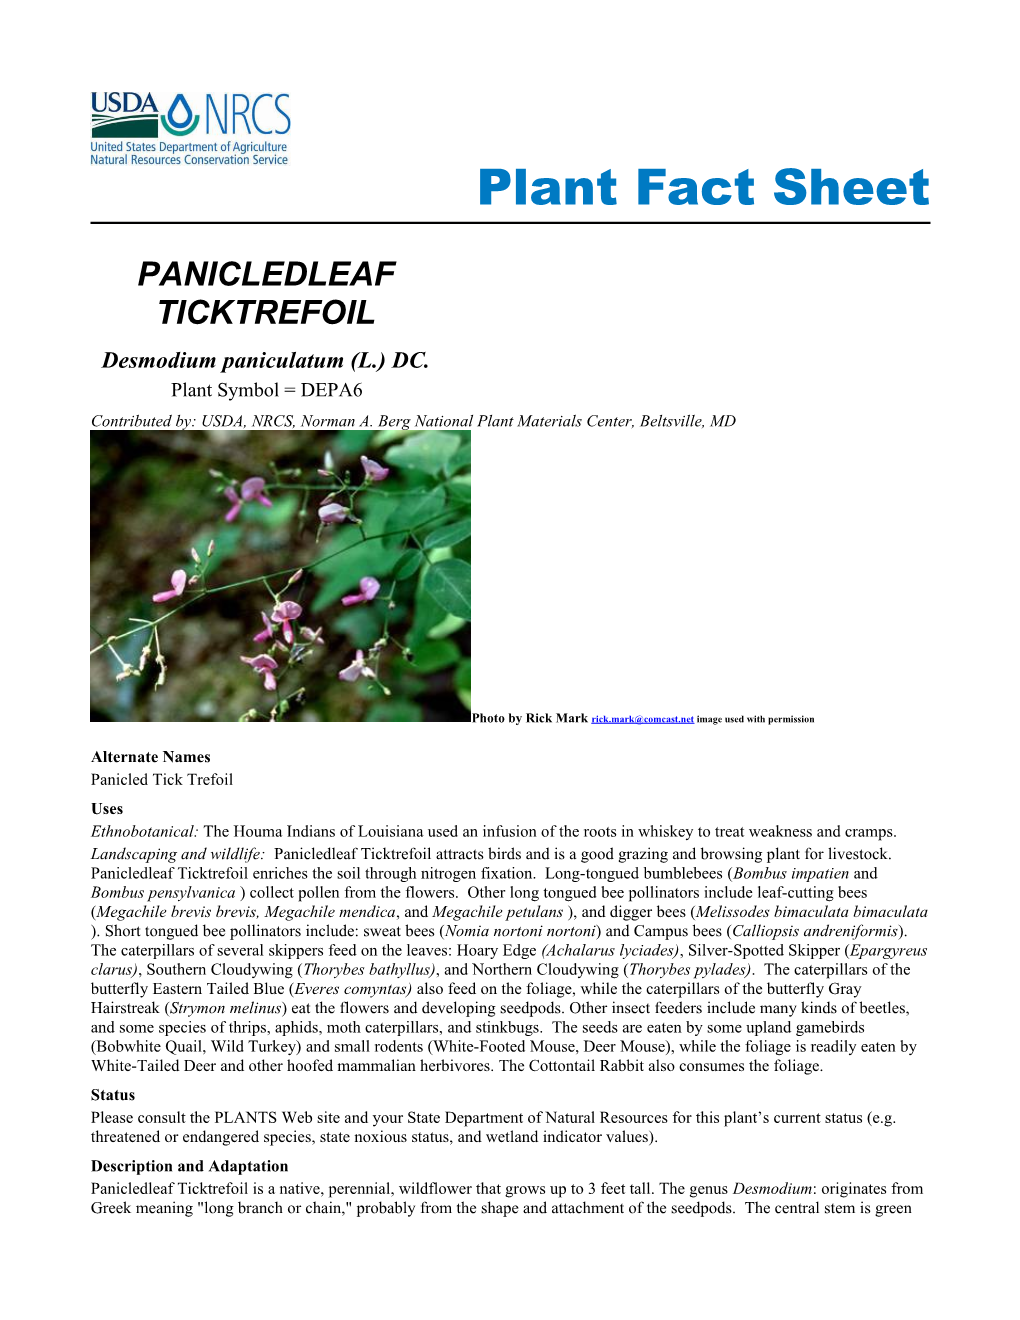 Panicledleaf Ticktrefoil (Desmodium Paniculatum) Plant Fact Sheet